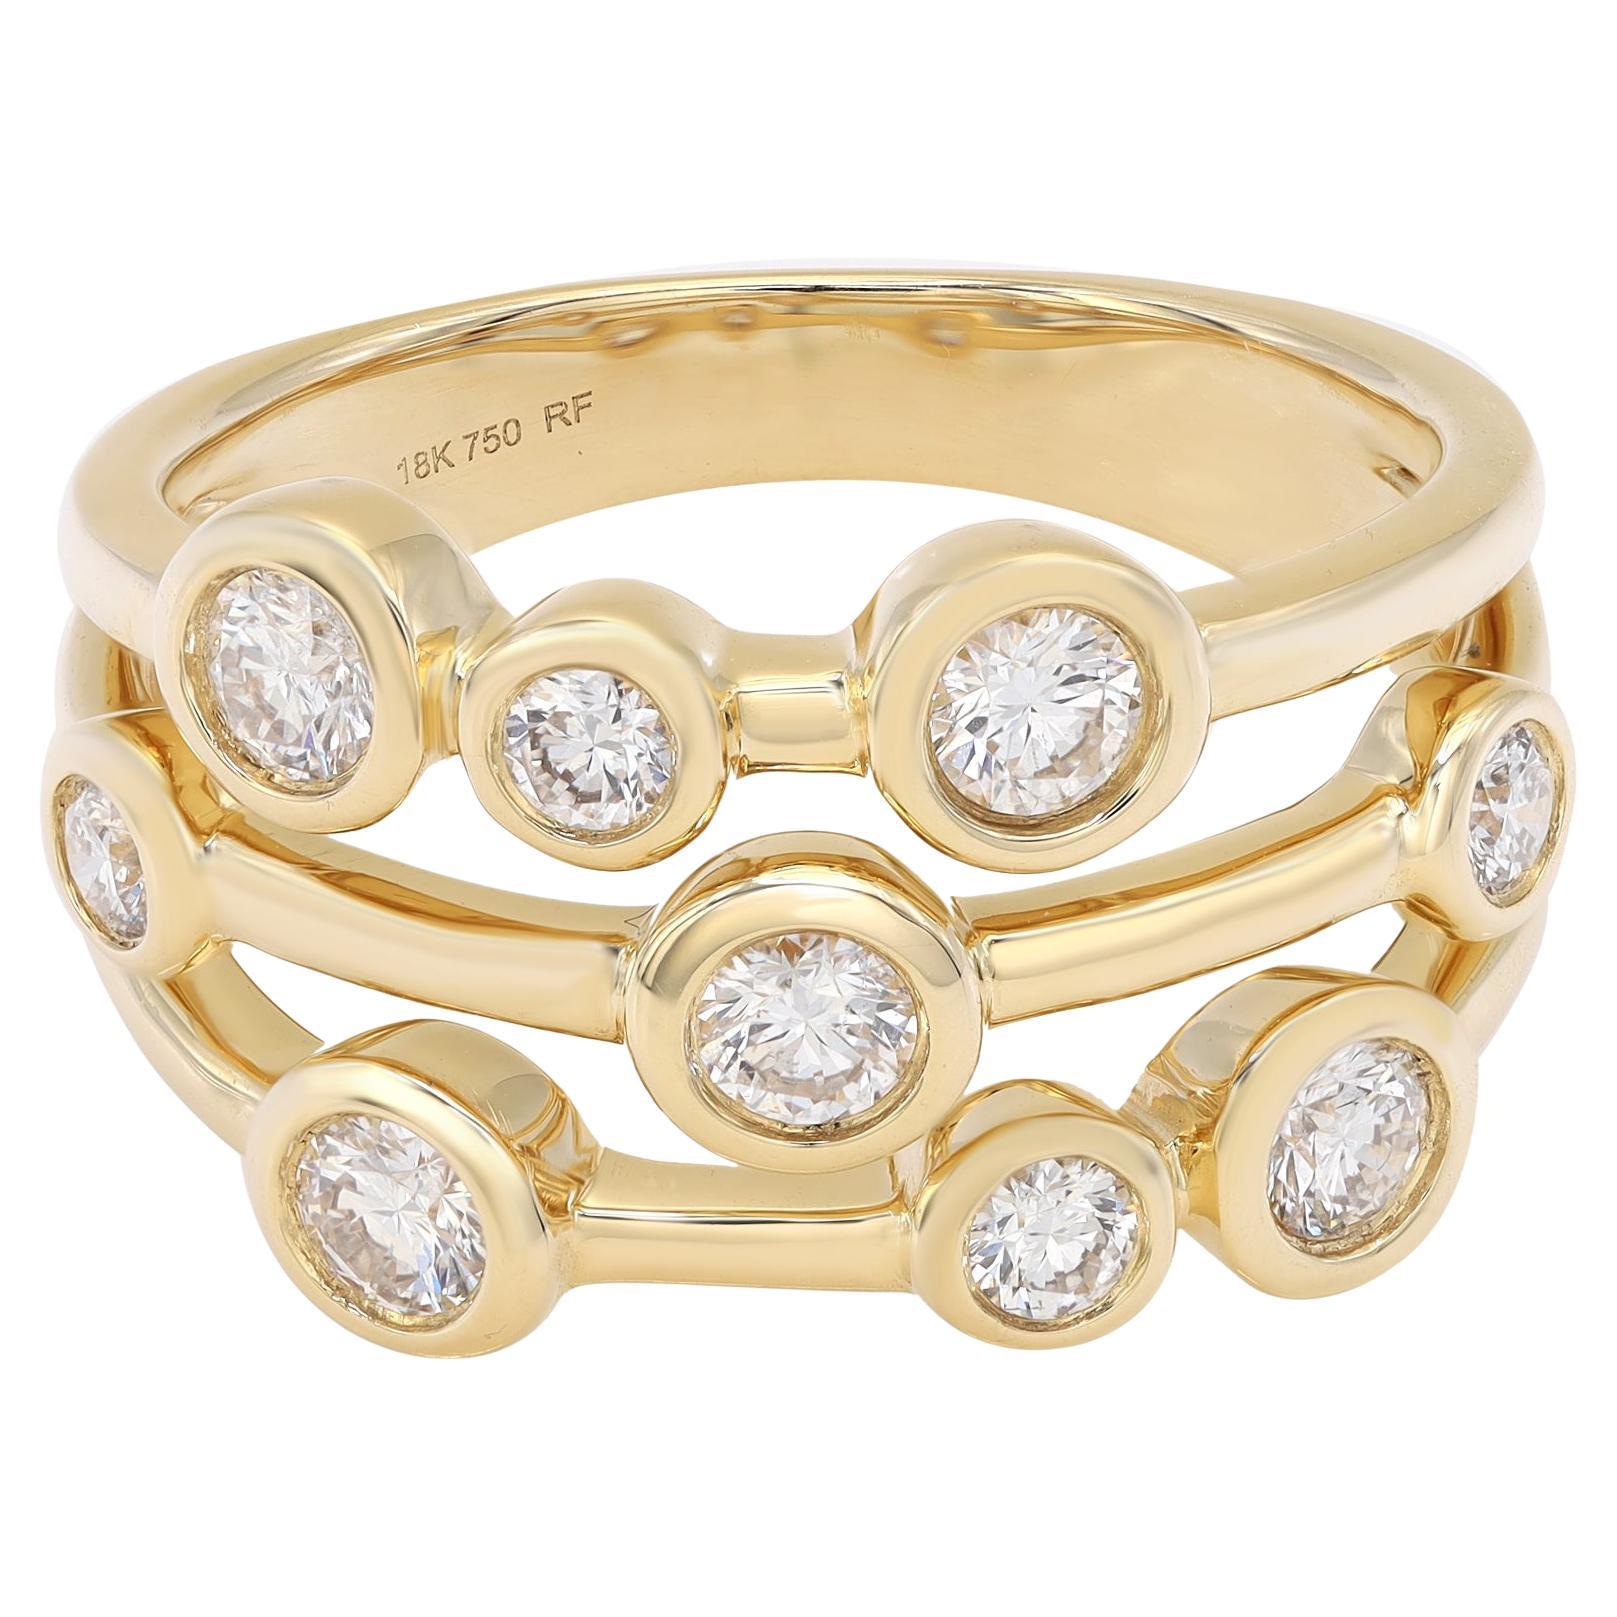 Bezel Set Round Cut Diamond Fancy Ring 18K Yellow Gold 0.69Cttw Size 6.75